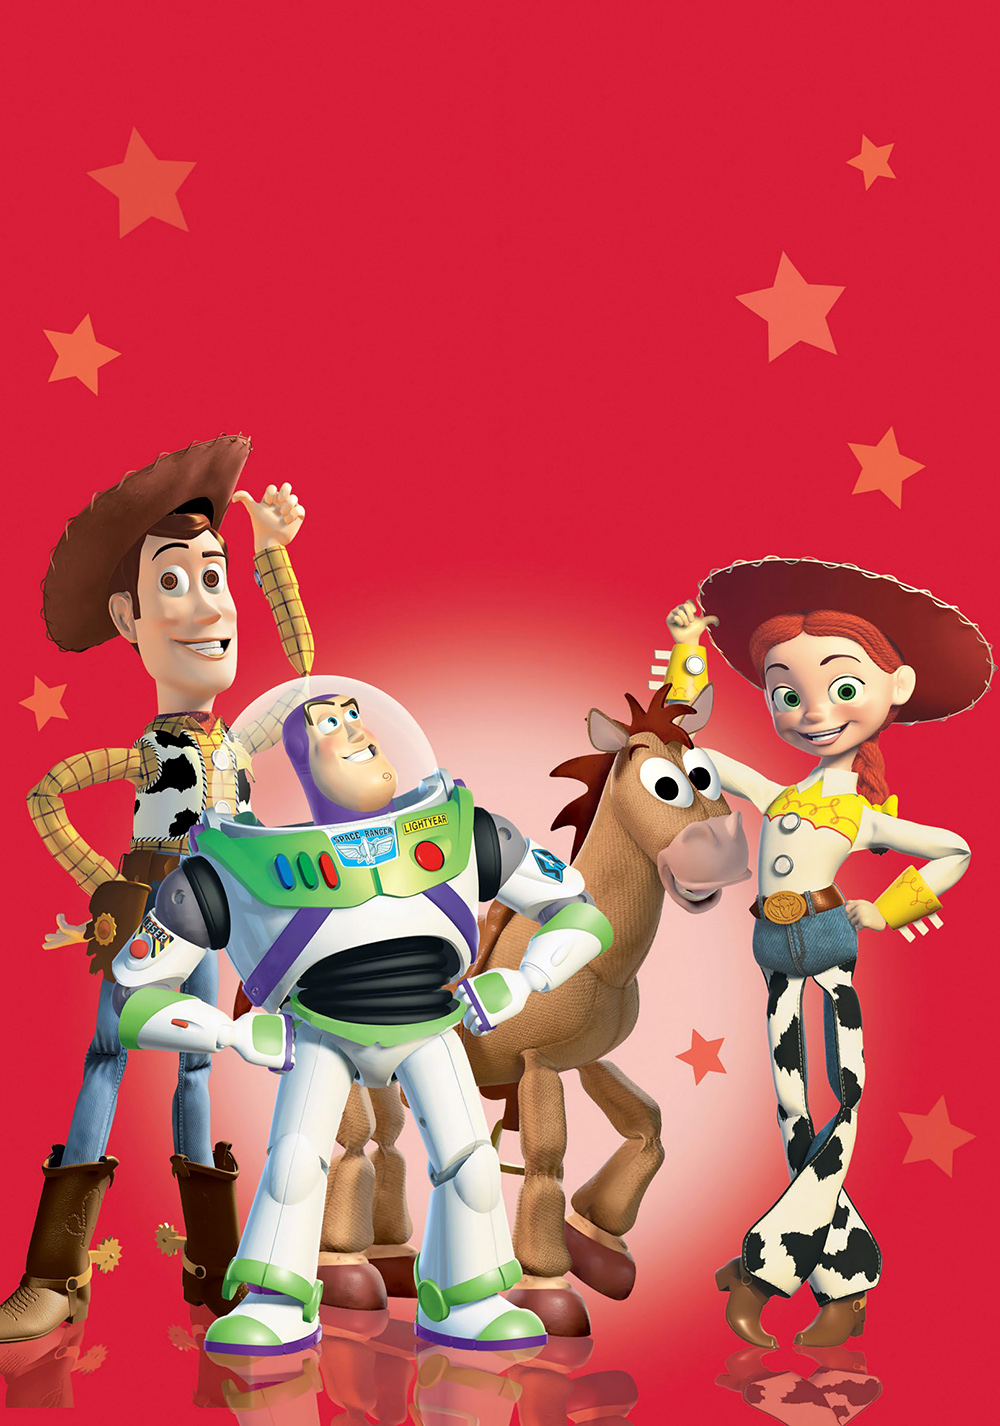 Toy Story 2 Art